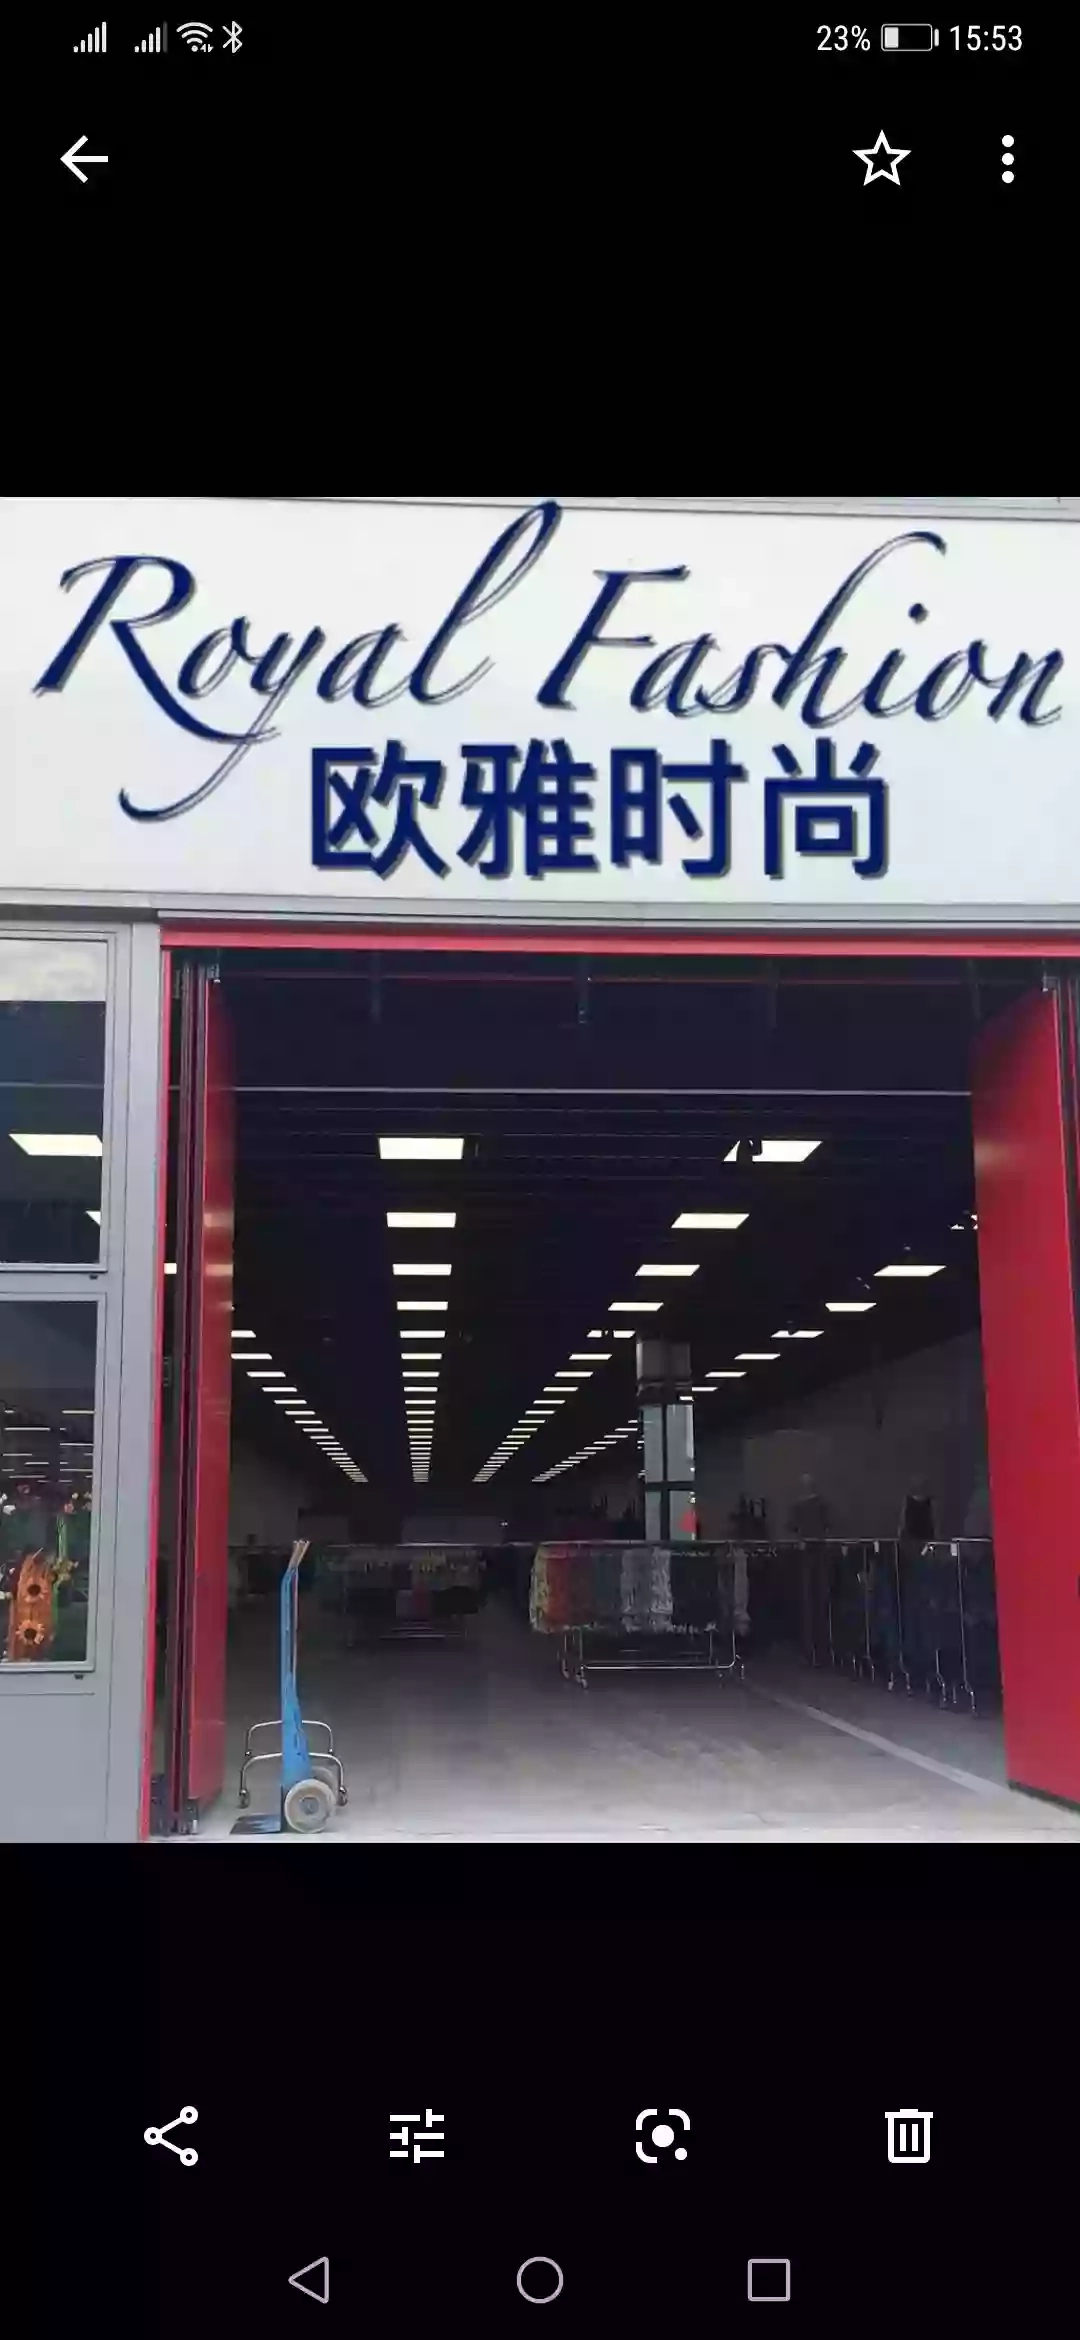 Royal Fashion